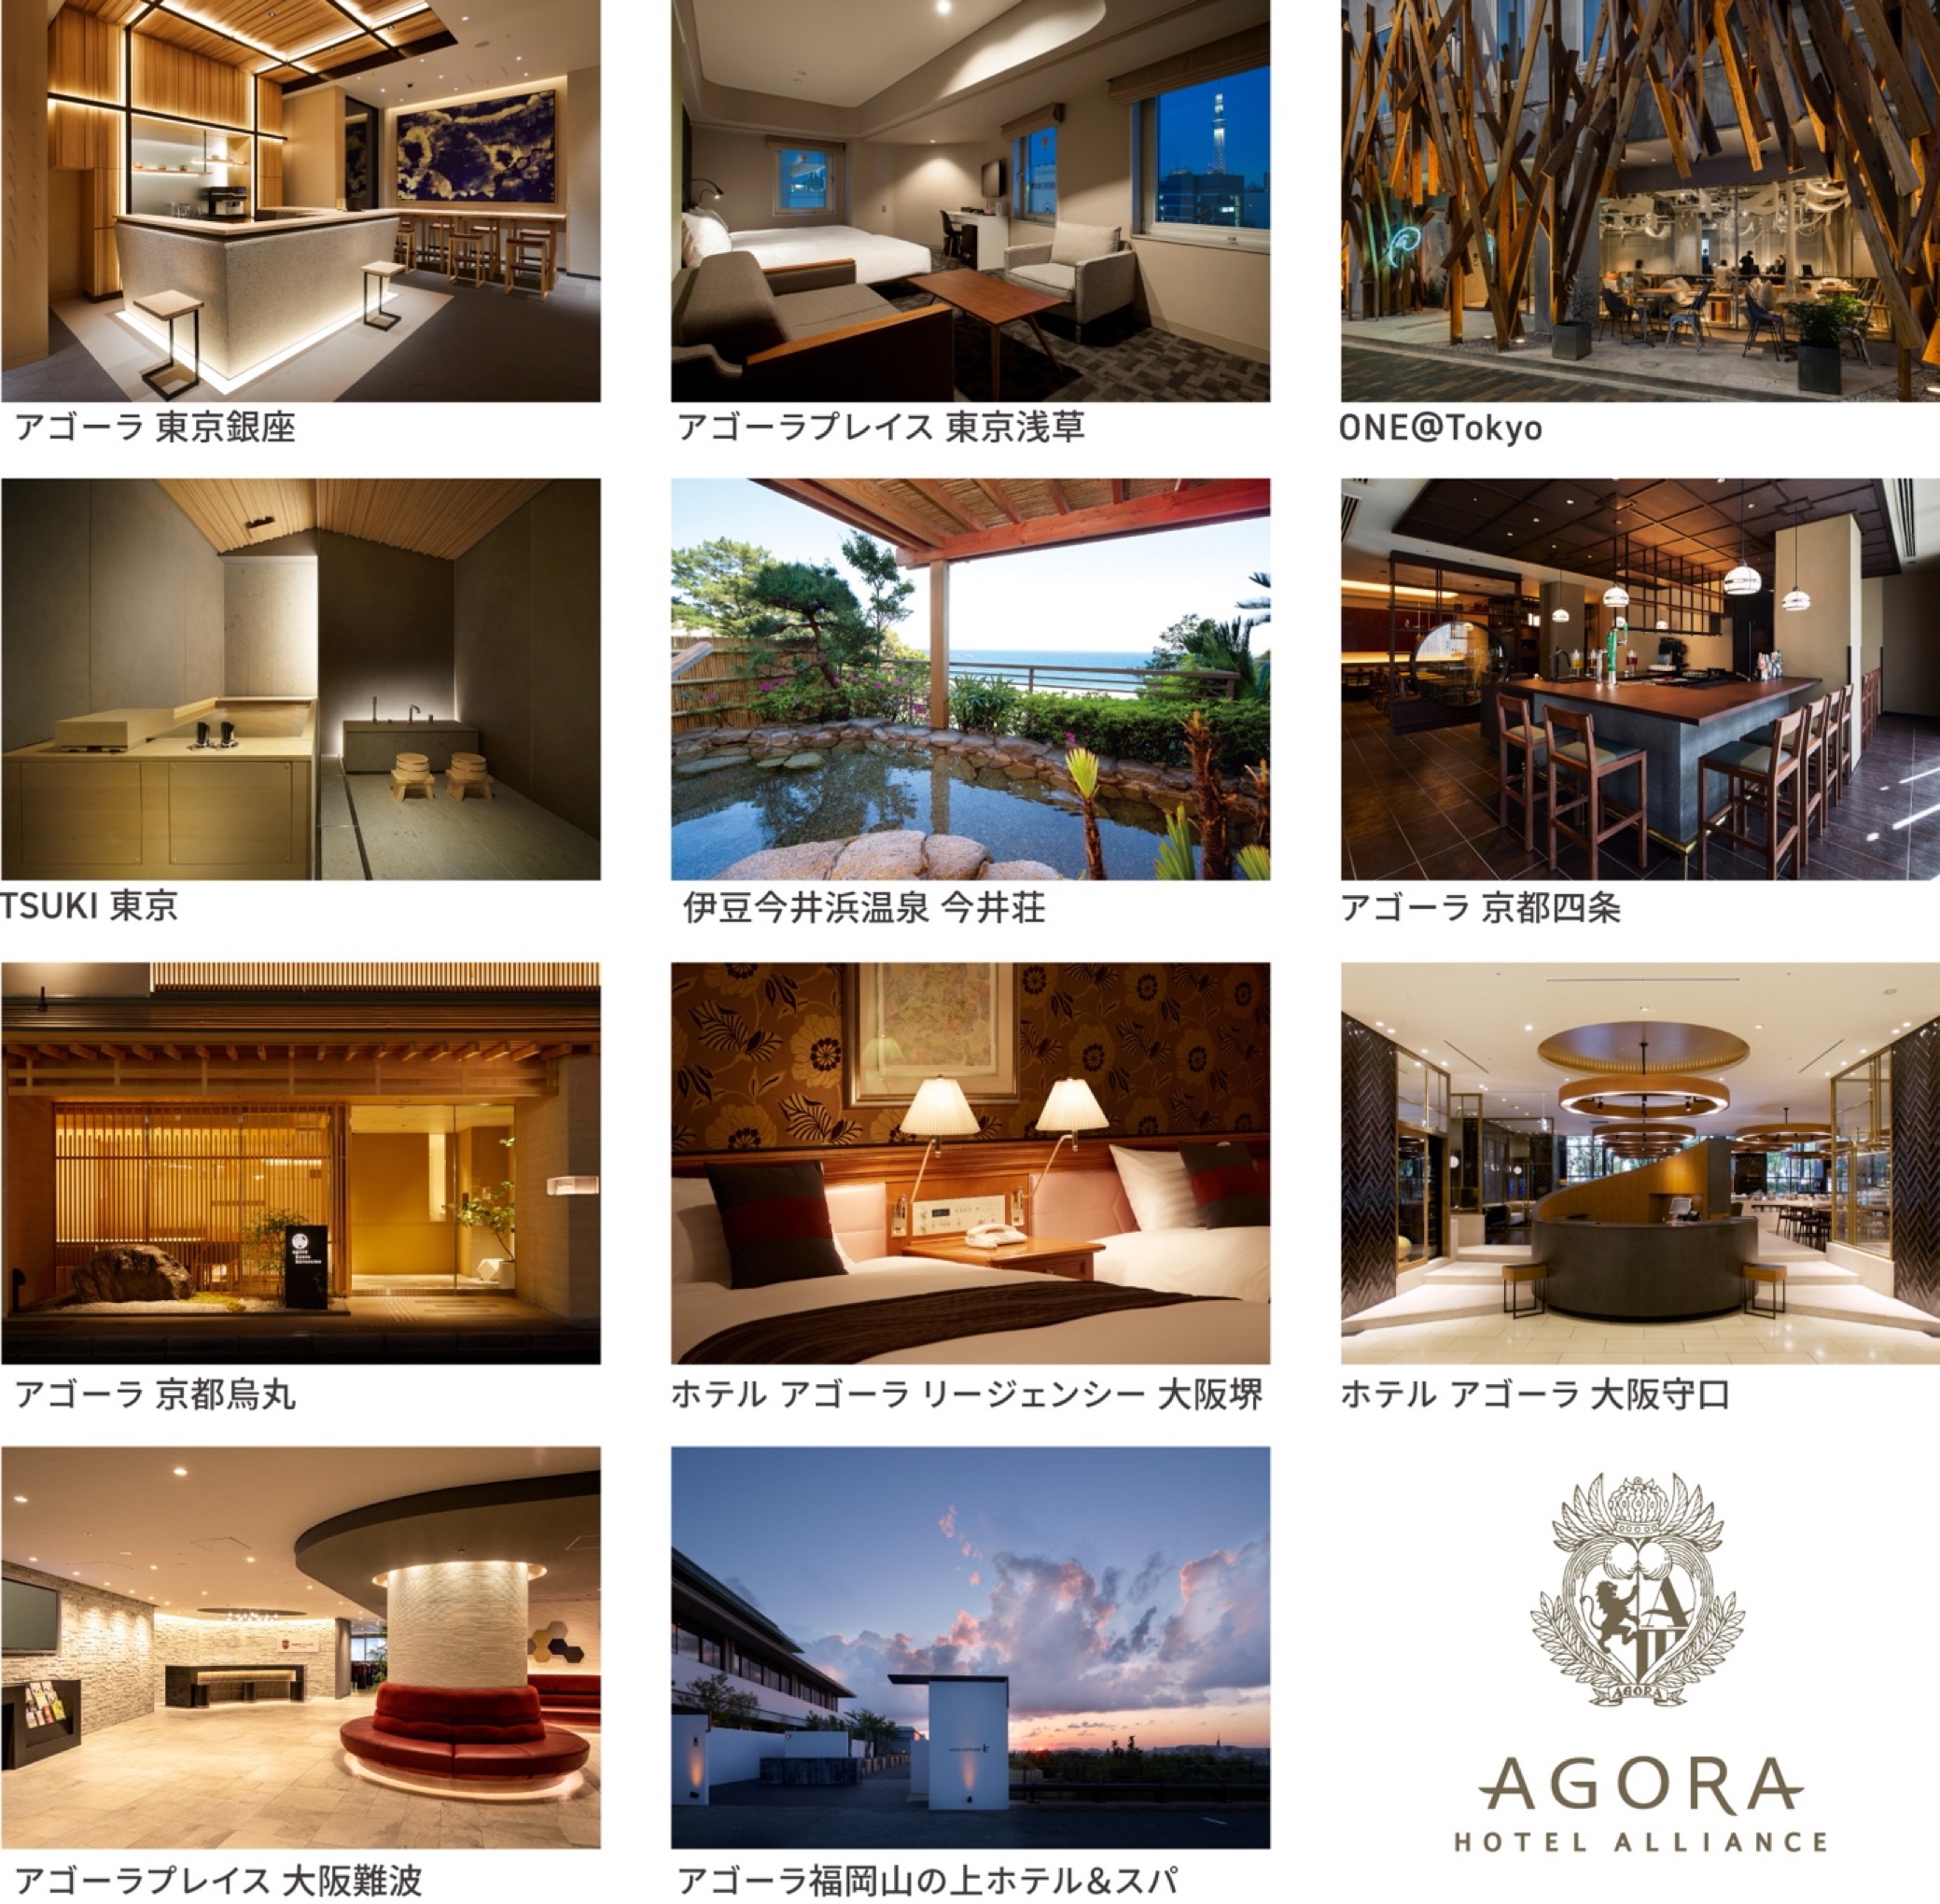 uONE@Tokyovuh[r[J uAgora Hotel Alliance 2023 ONE@Tokyov